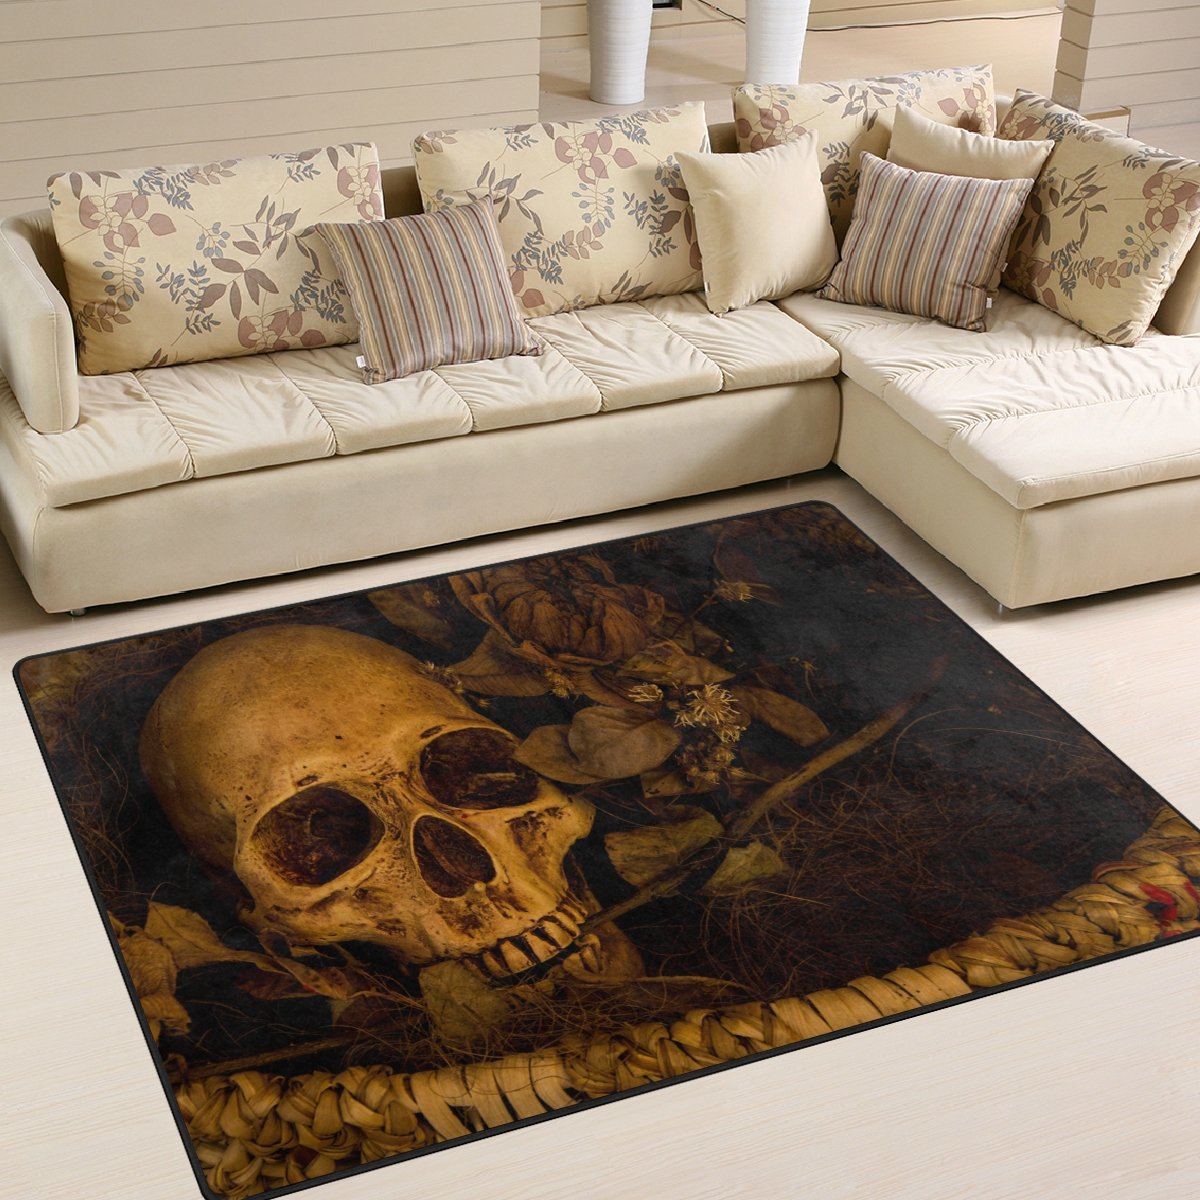 ALAZA Vintage Horrible Skull Area Rug Rugs for Living Room Bedroom 5'3"x4'